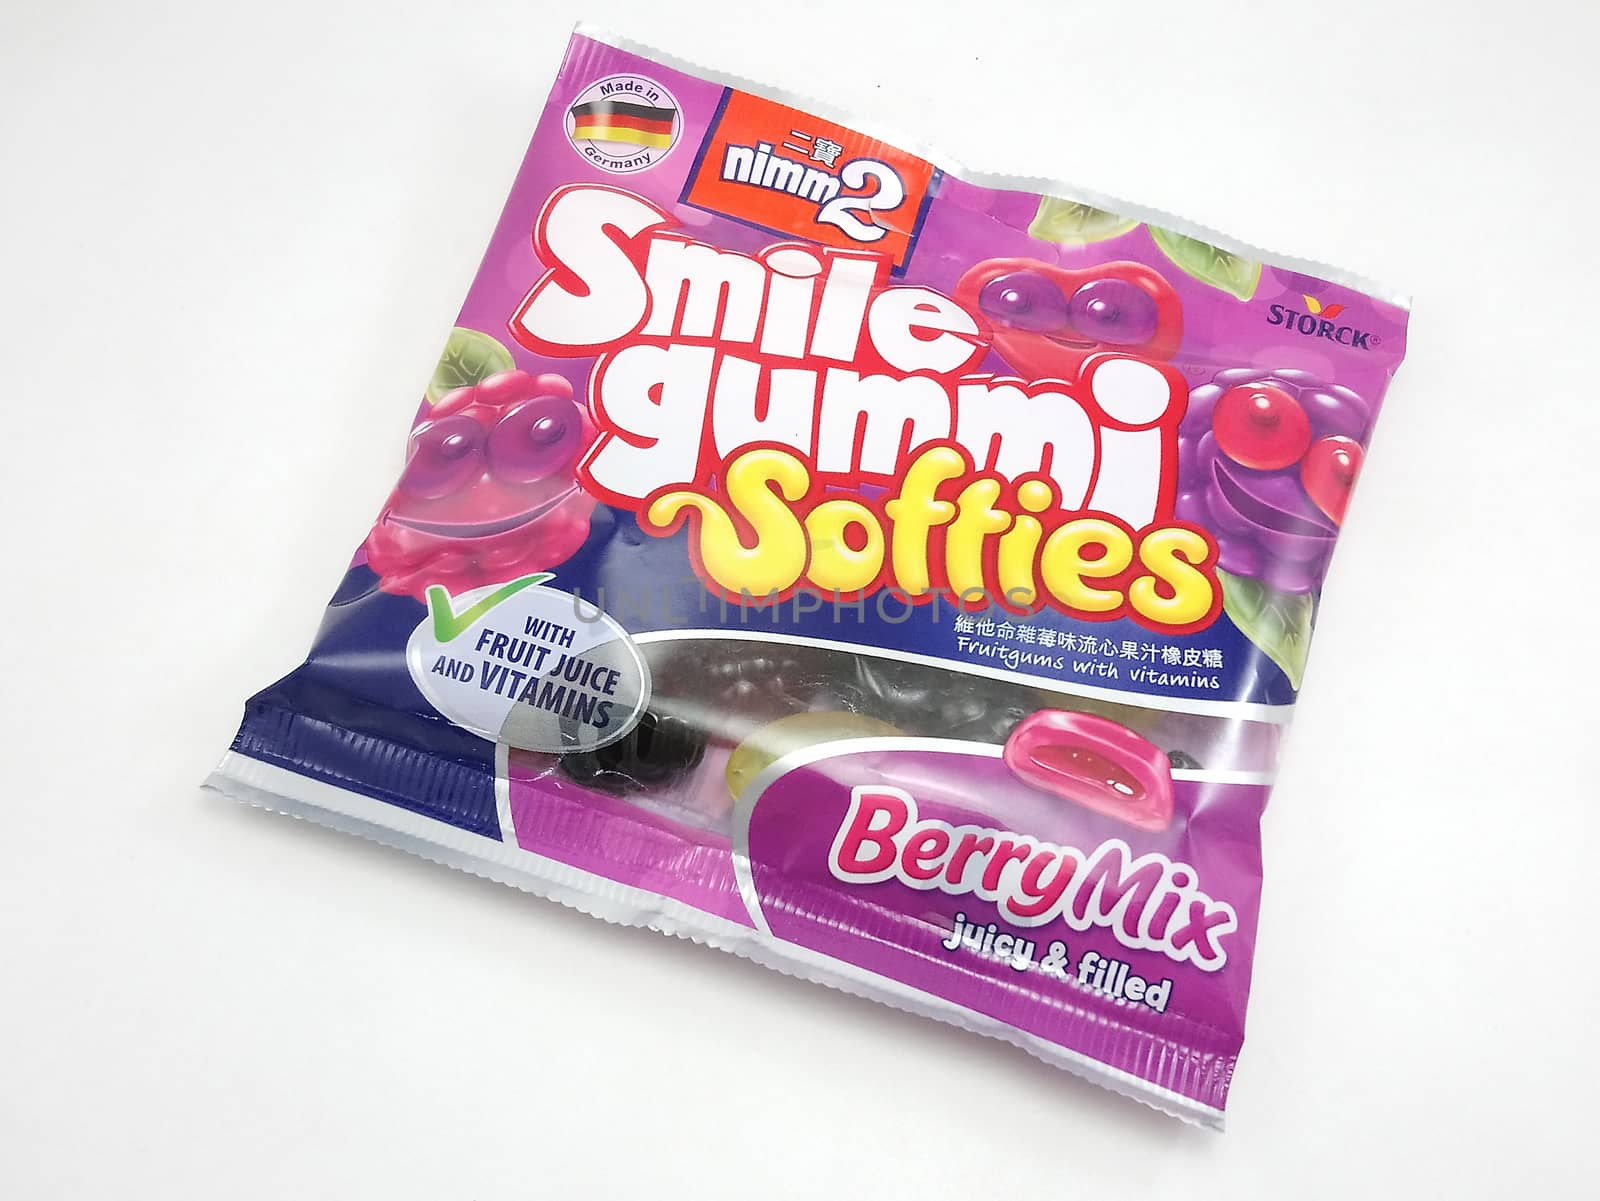 MANILA, PH - SEPT 22 - Smile gummi softies berry mix on September 22, 2020 in Manila, Philippines.